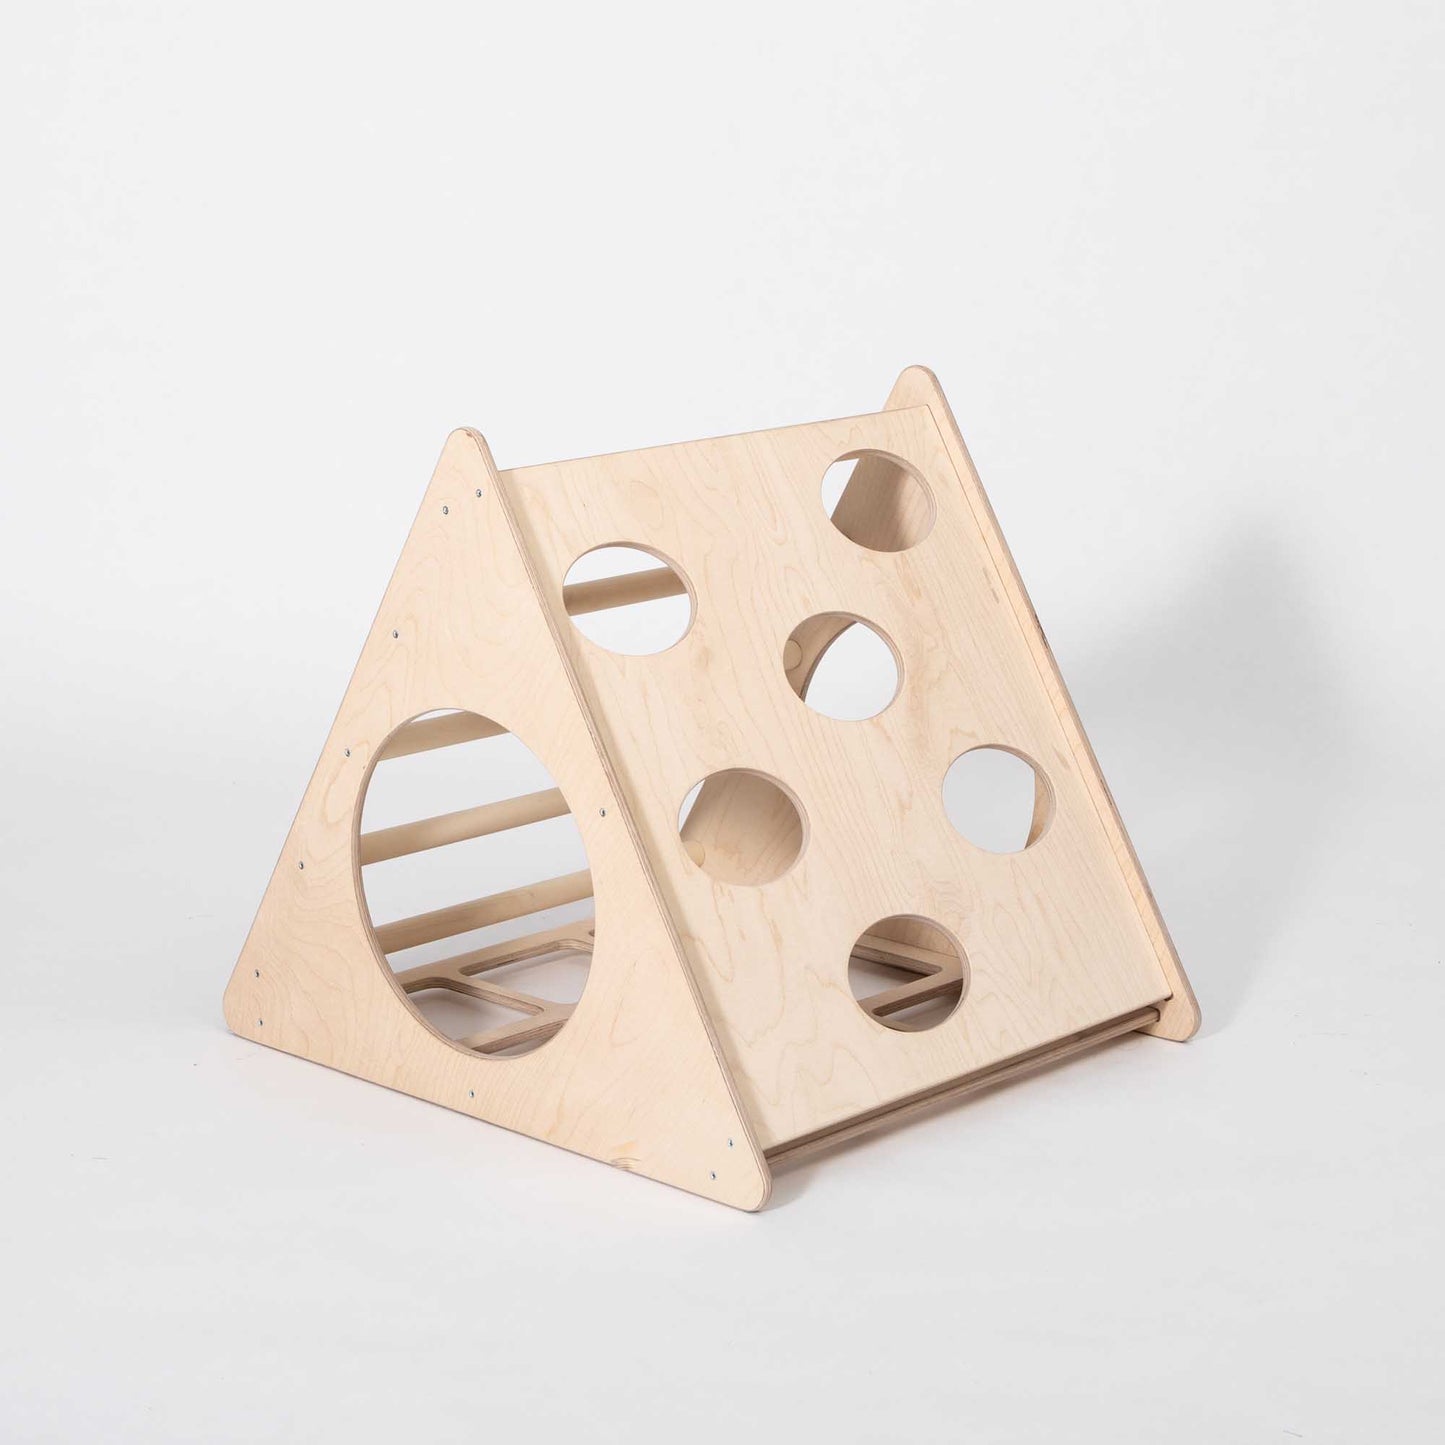 A Montessori Climbing triangle with sensory panels, designed to enhance motor skills.